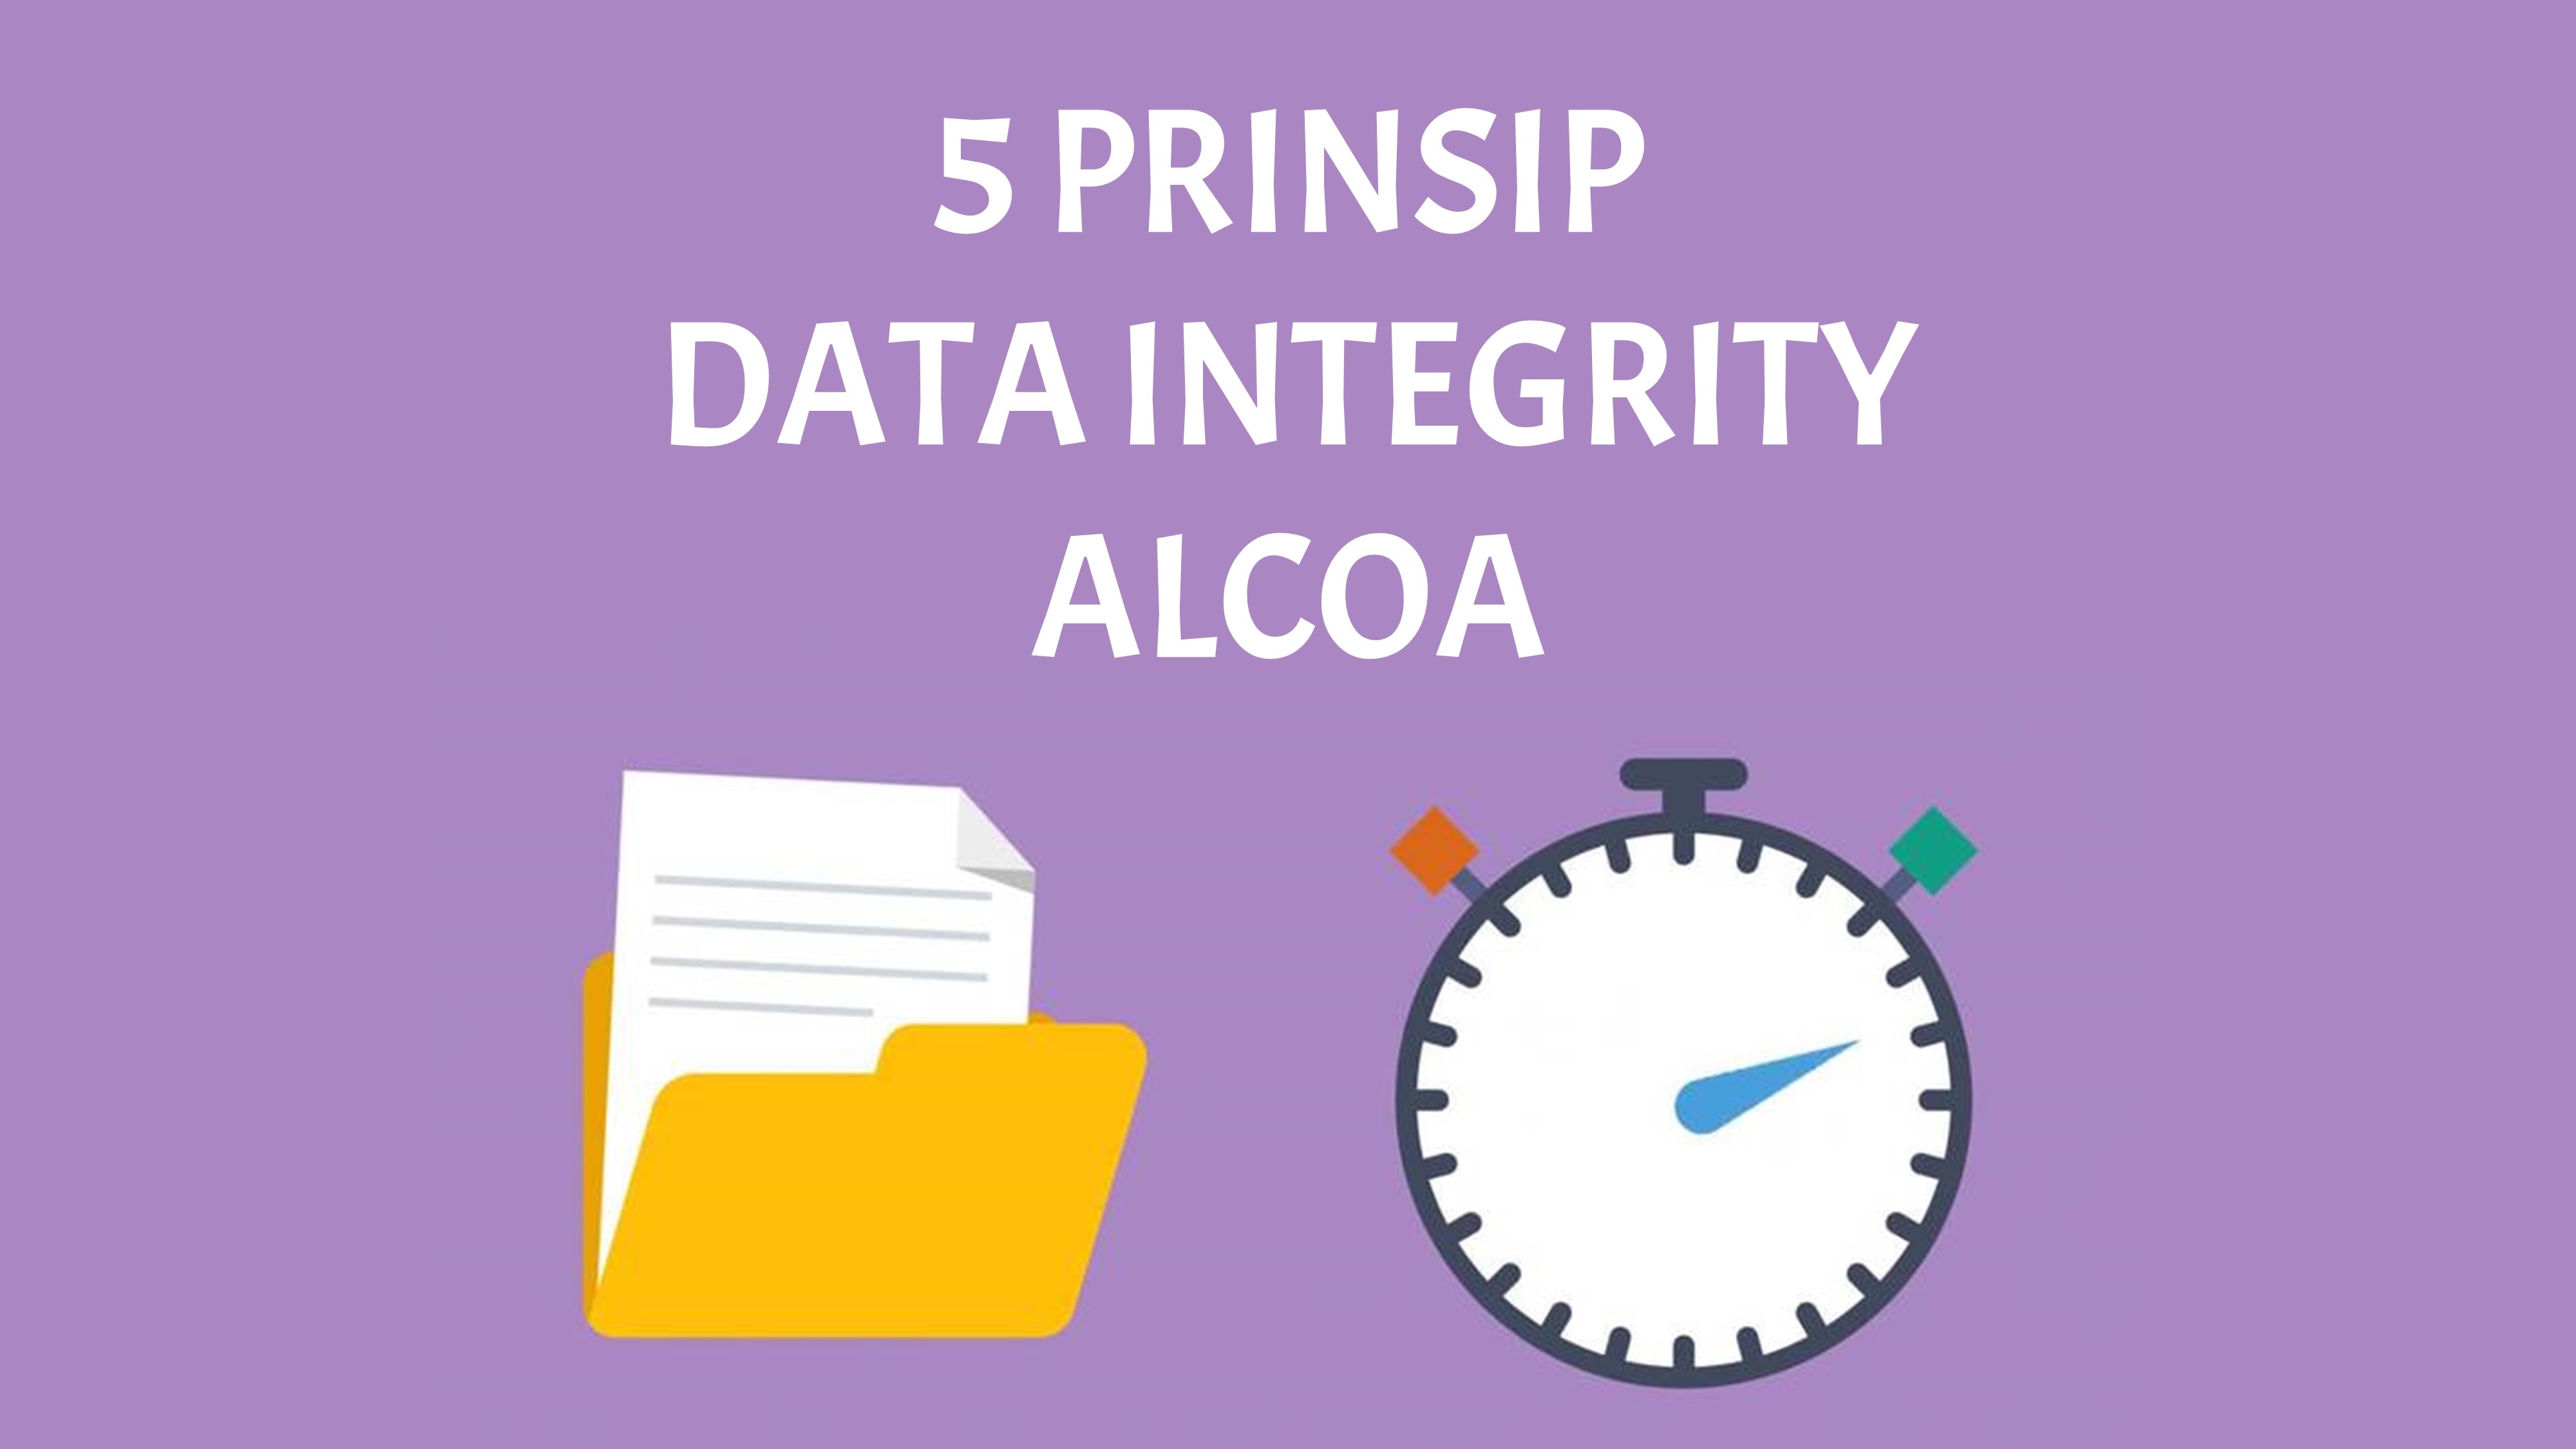 5 Prinsip Data Integrity Alcoa